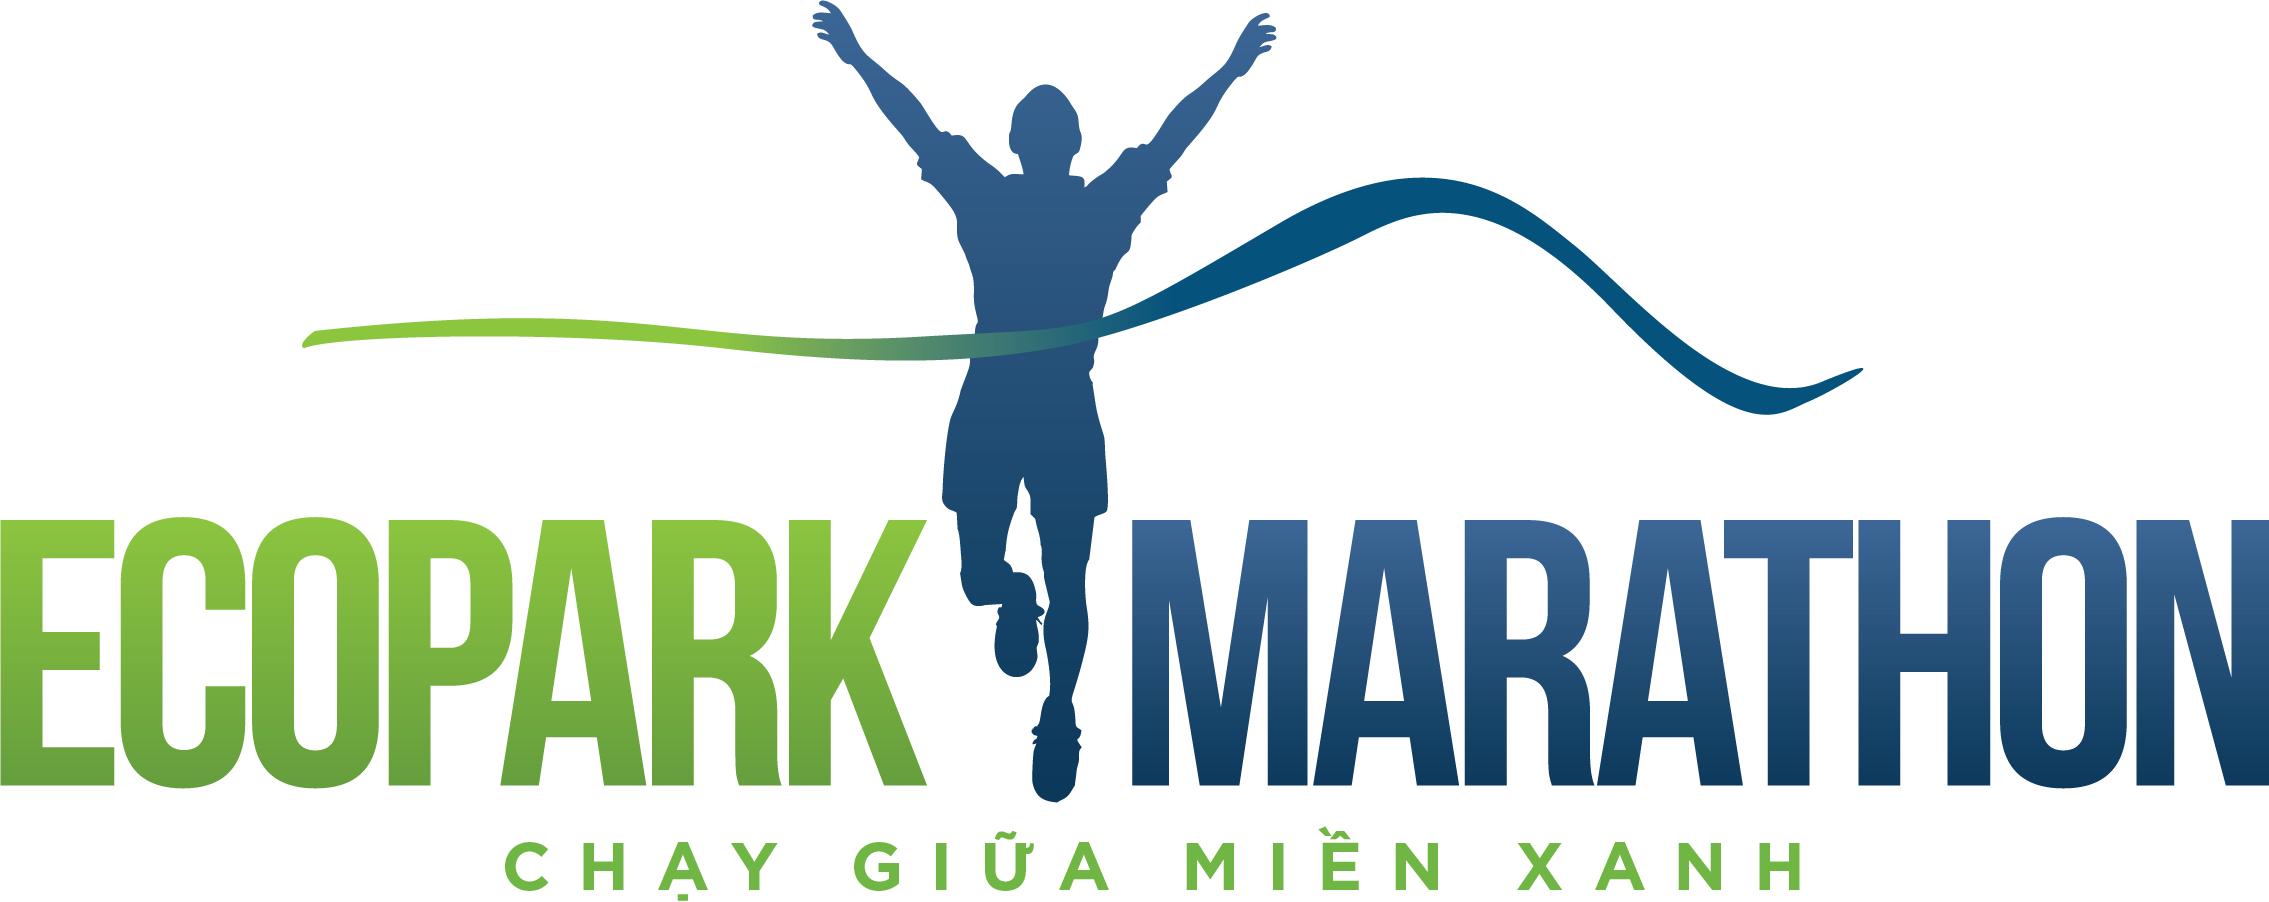 Ecopark Marathon 2020